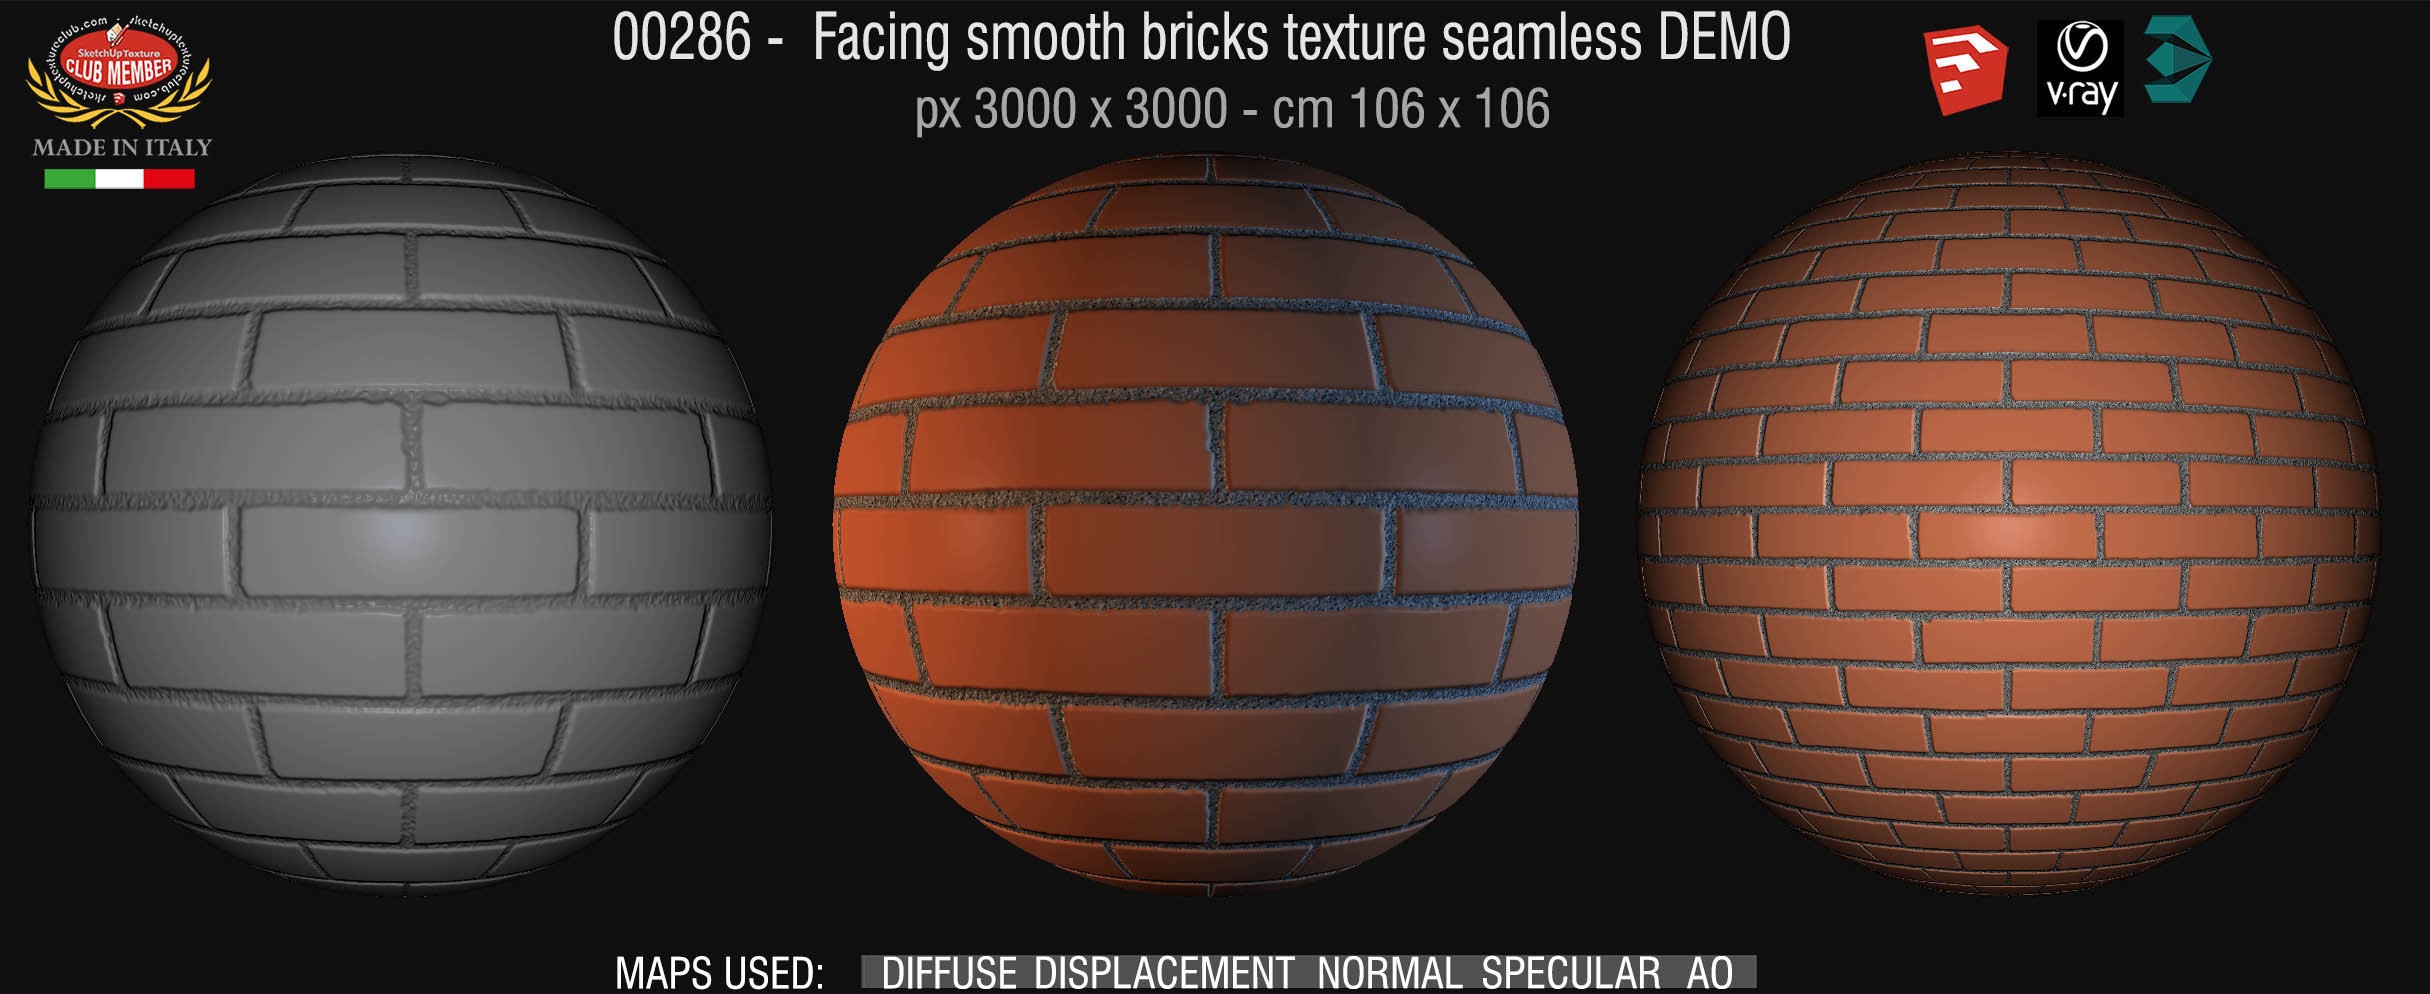 00286 Facing smooth bricks texture seamless + maps DEMO